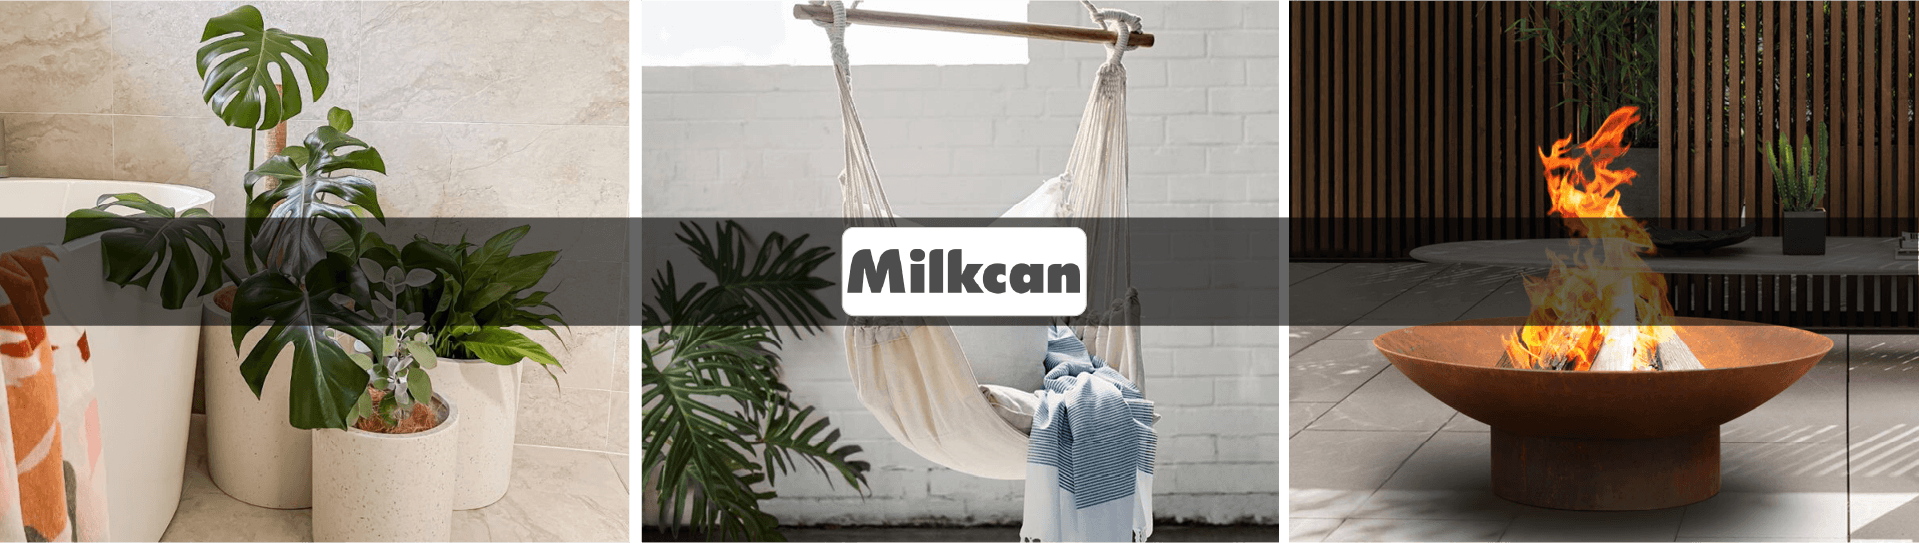 Milkcan banner